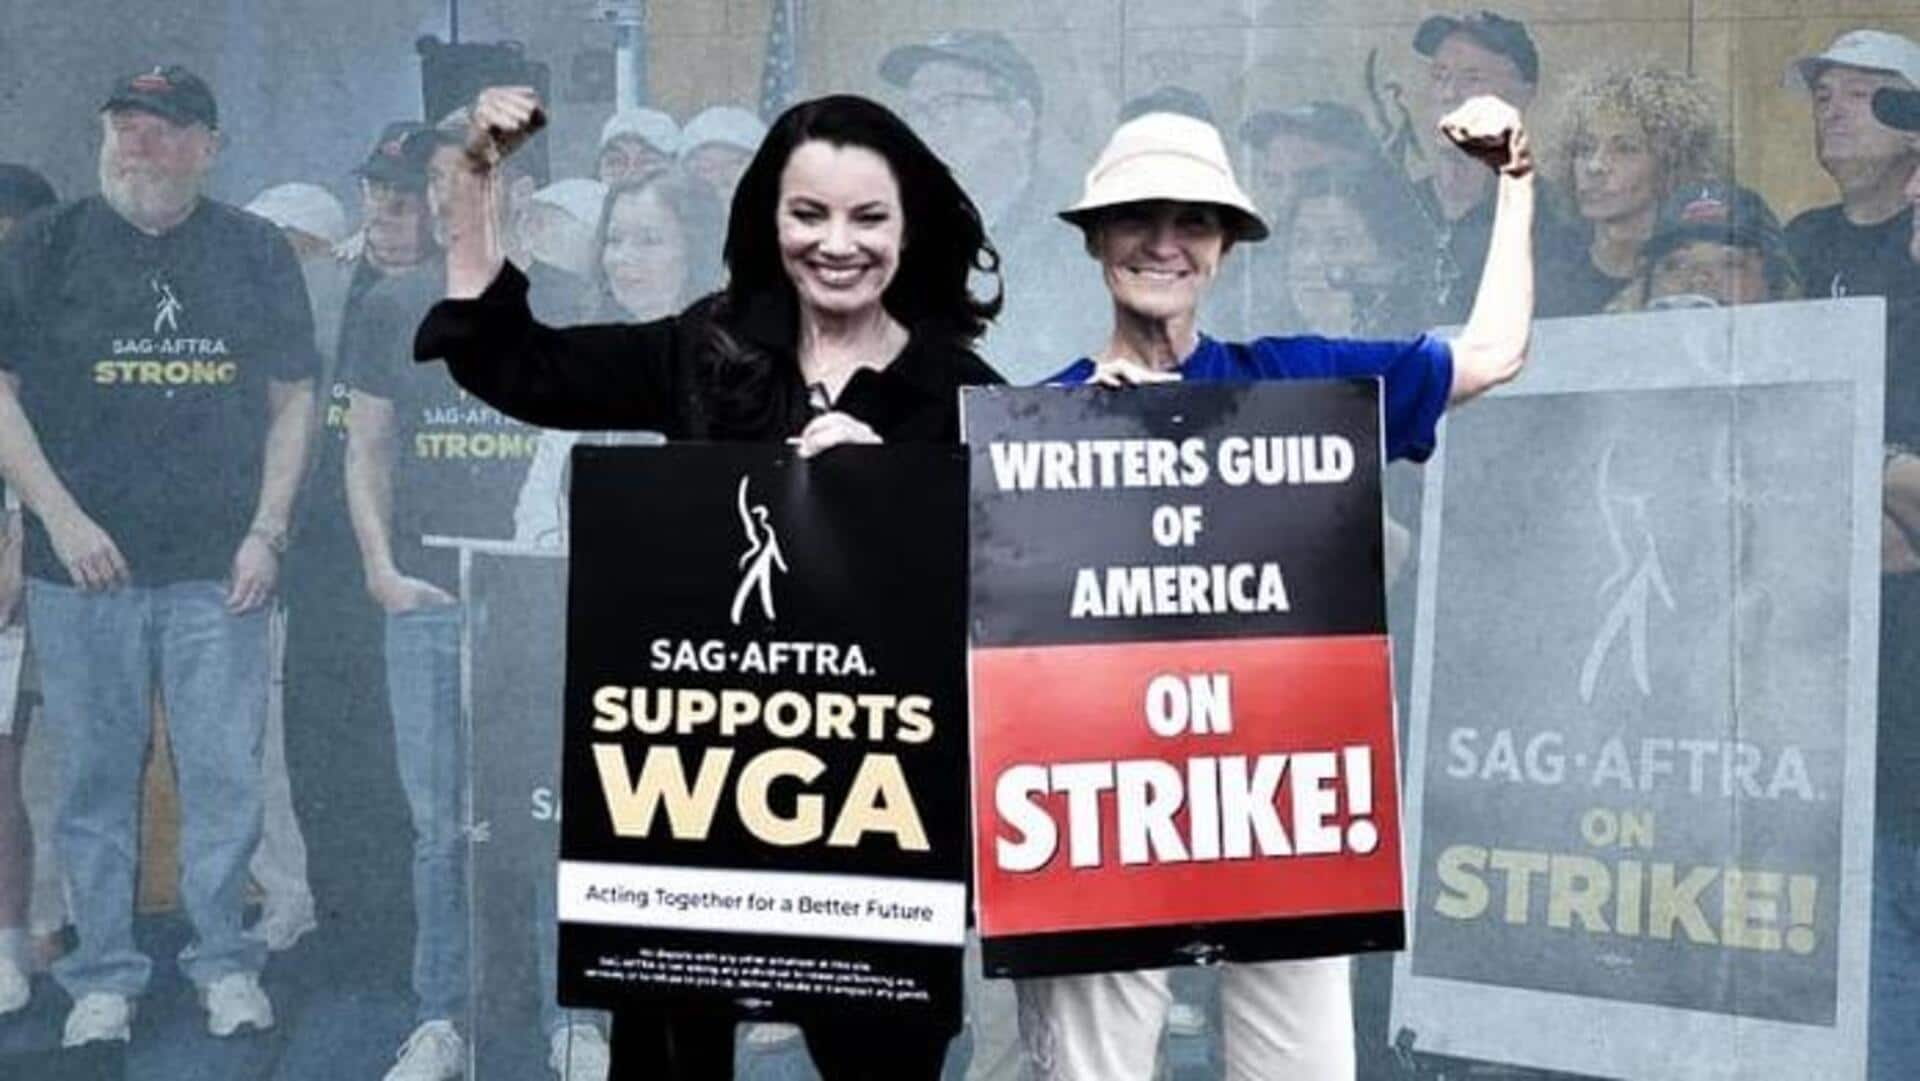 Hollywood strike: Actors were offered $1B before strike, claim studios